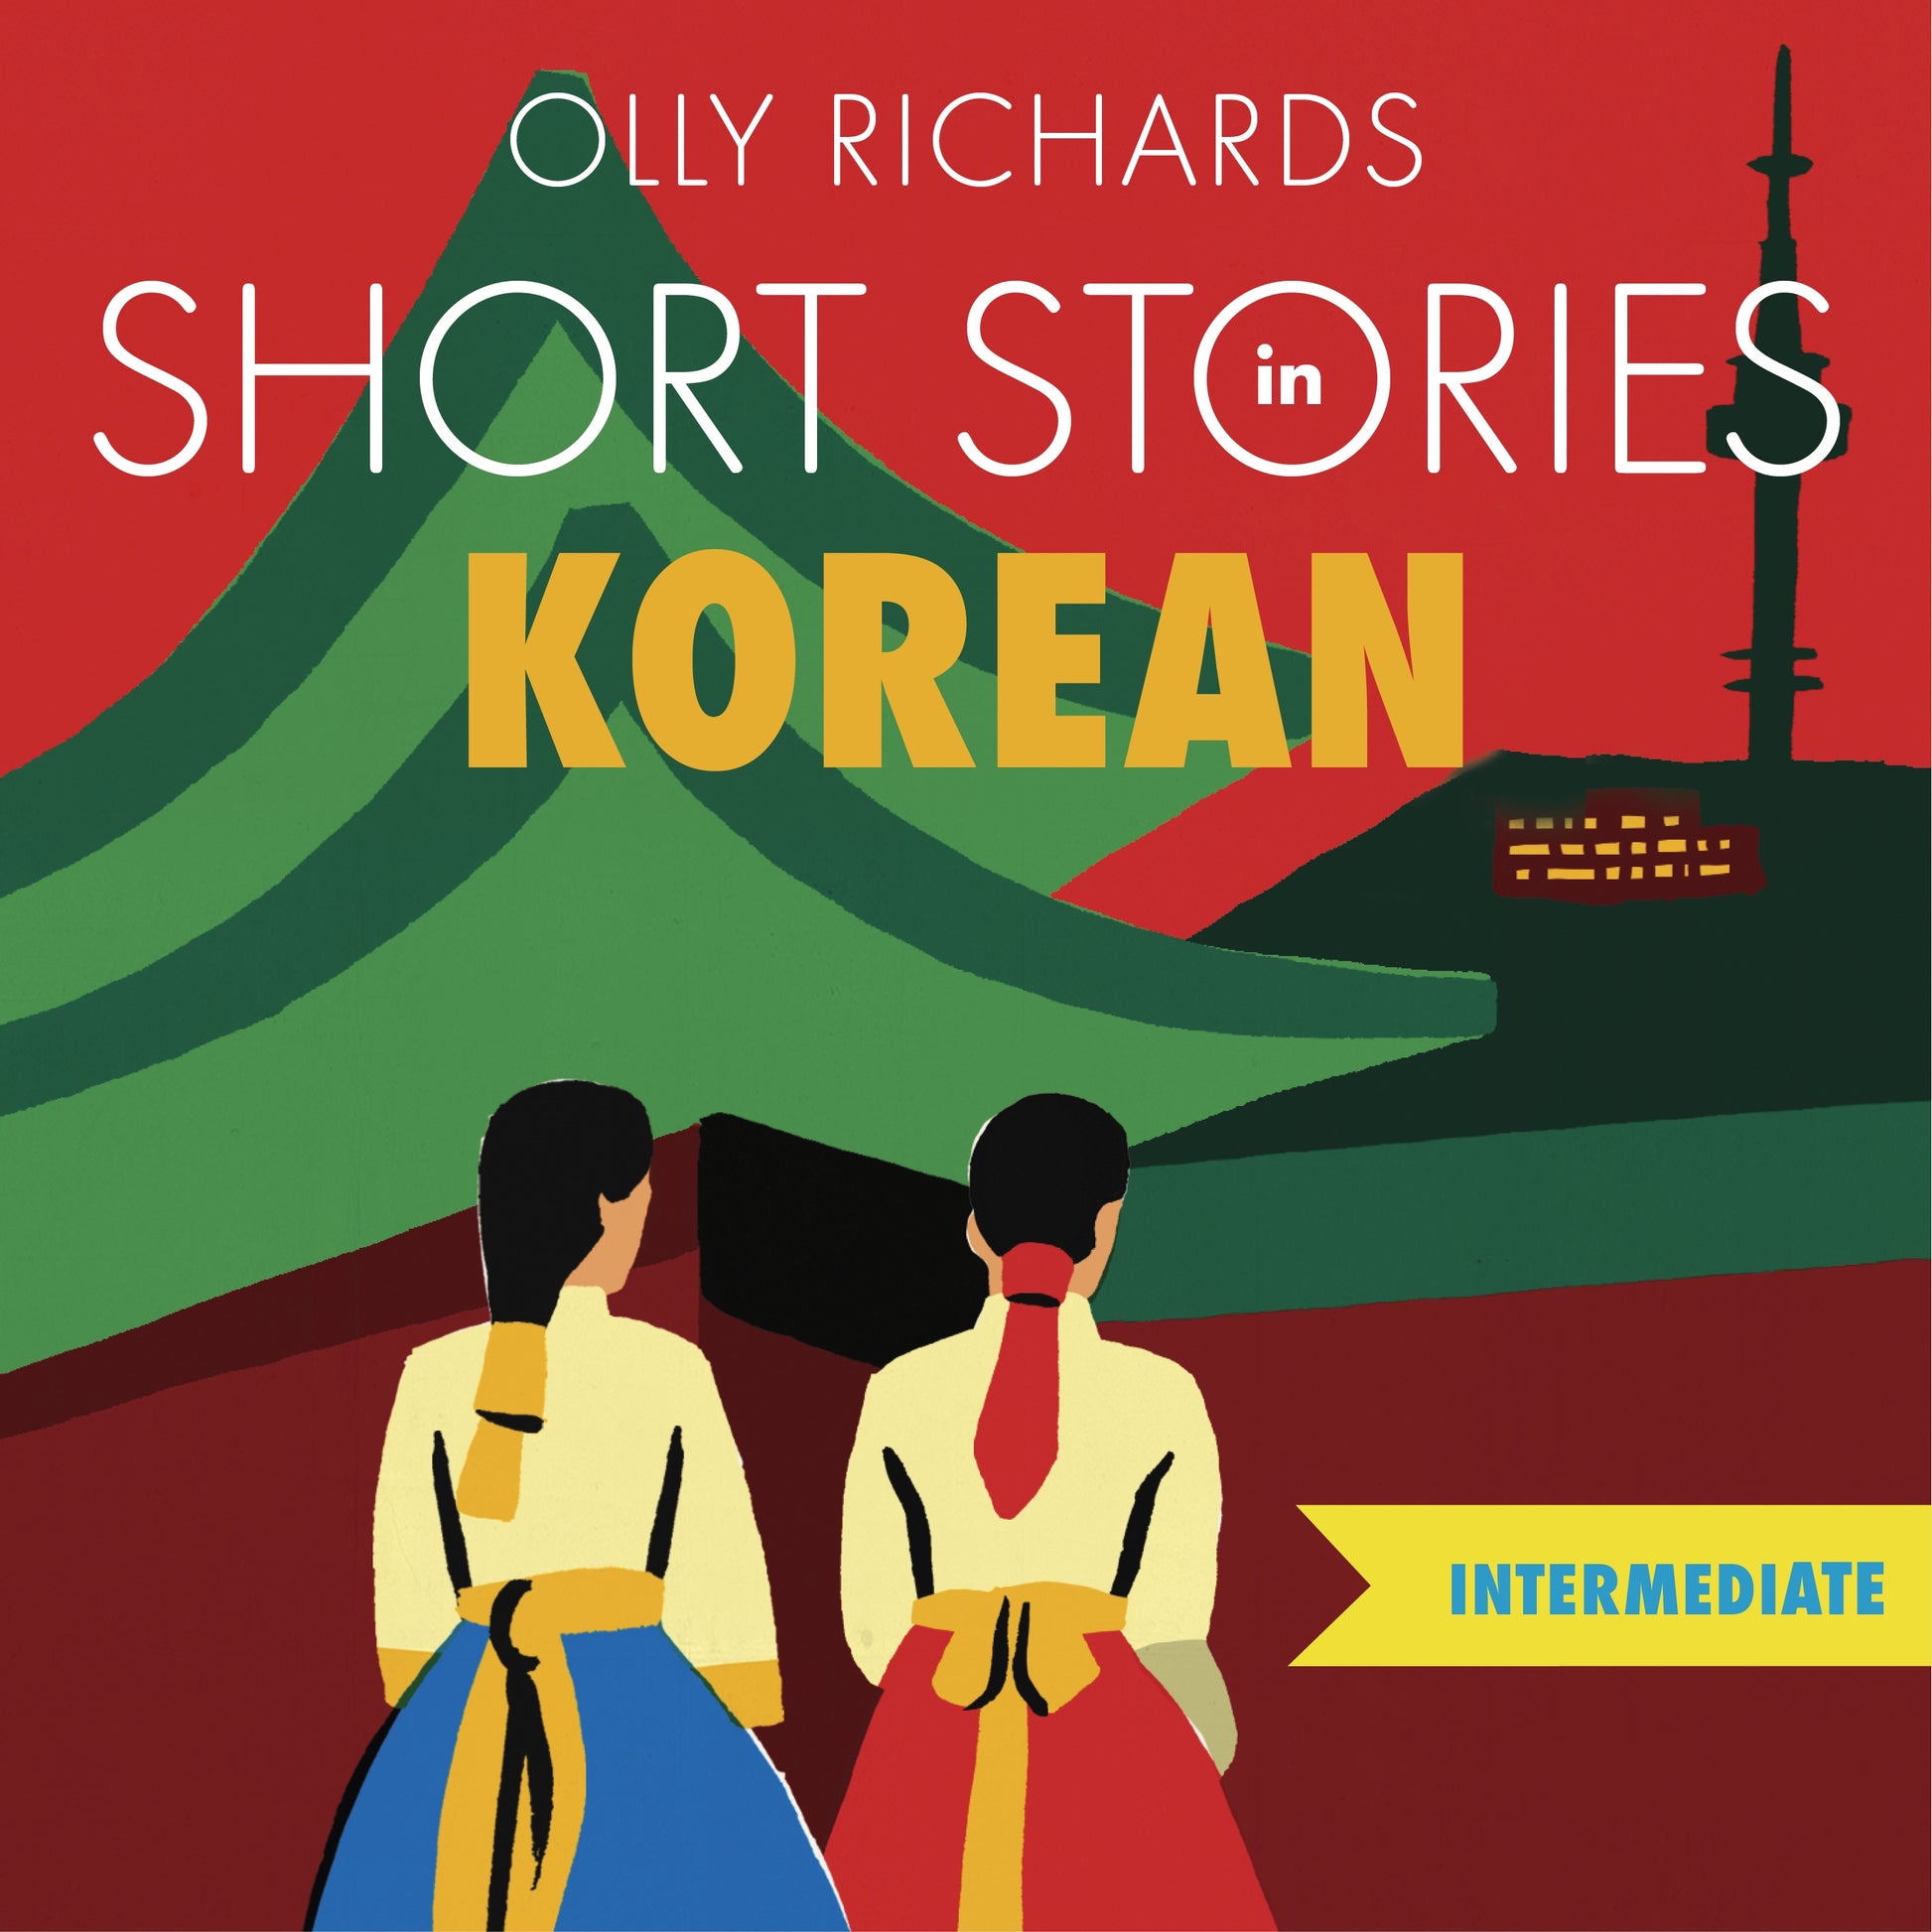 Short Stories in Korean for Intermediate Learners by Olly Richards, Arthur Lee